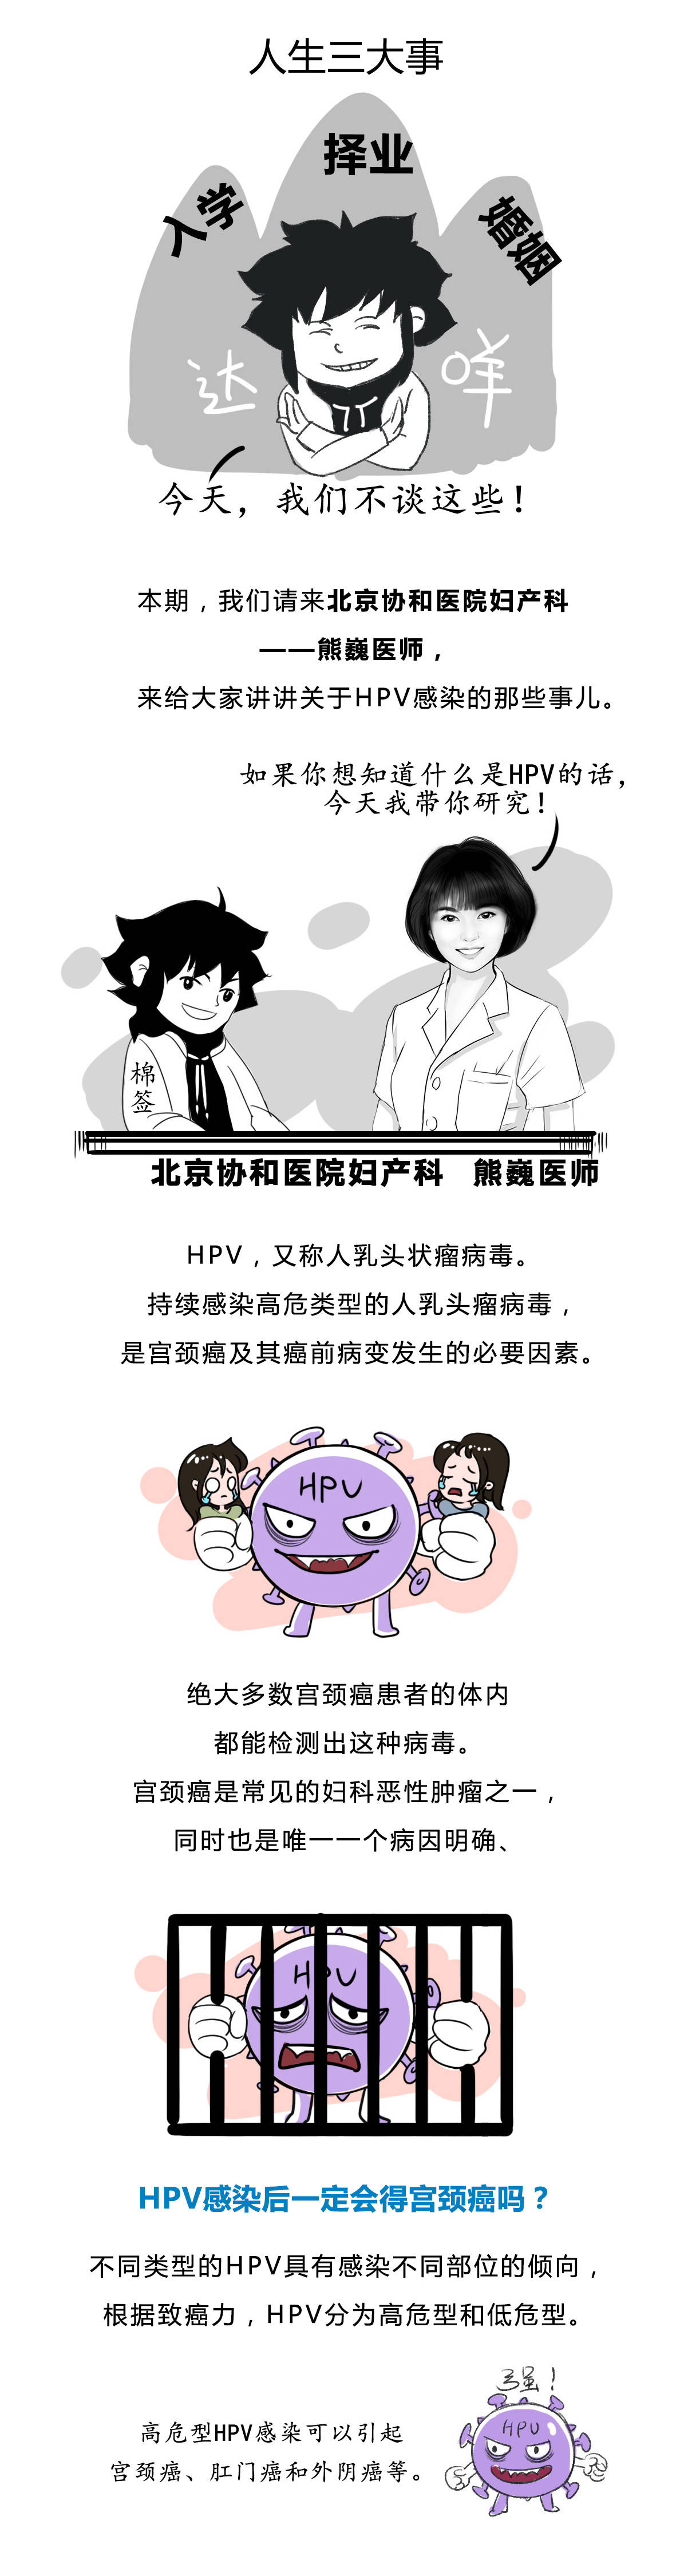 hpv疫苗与宫颈癌防治科普动画